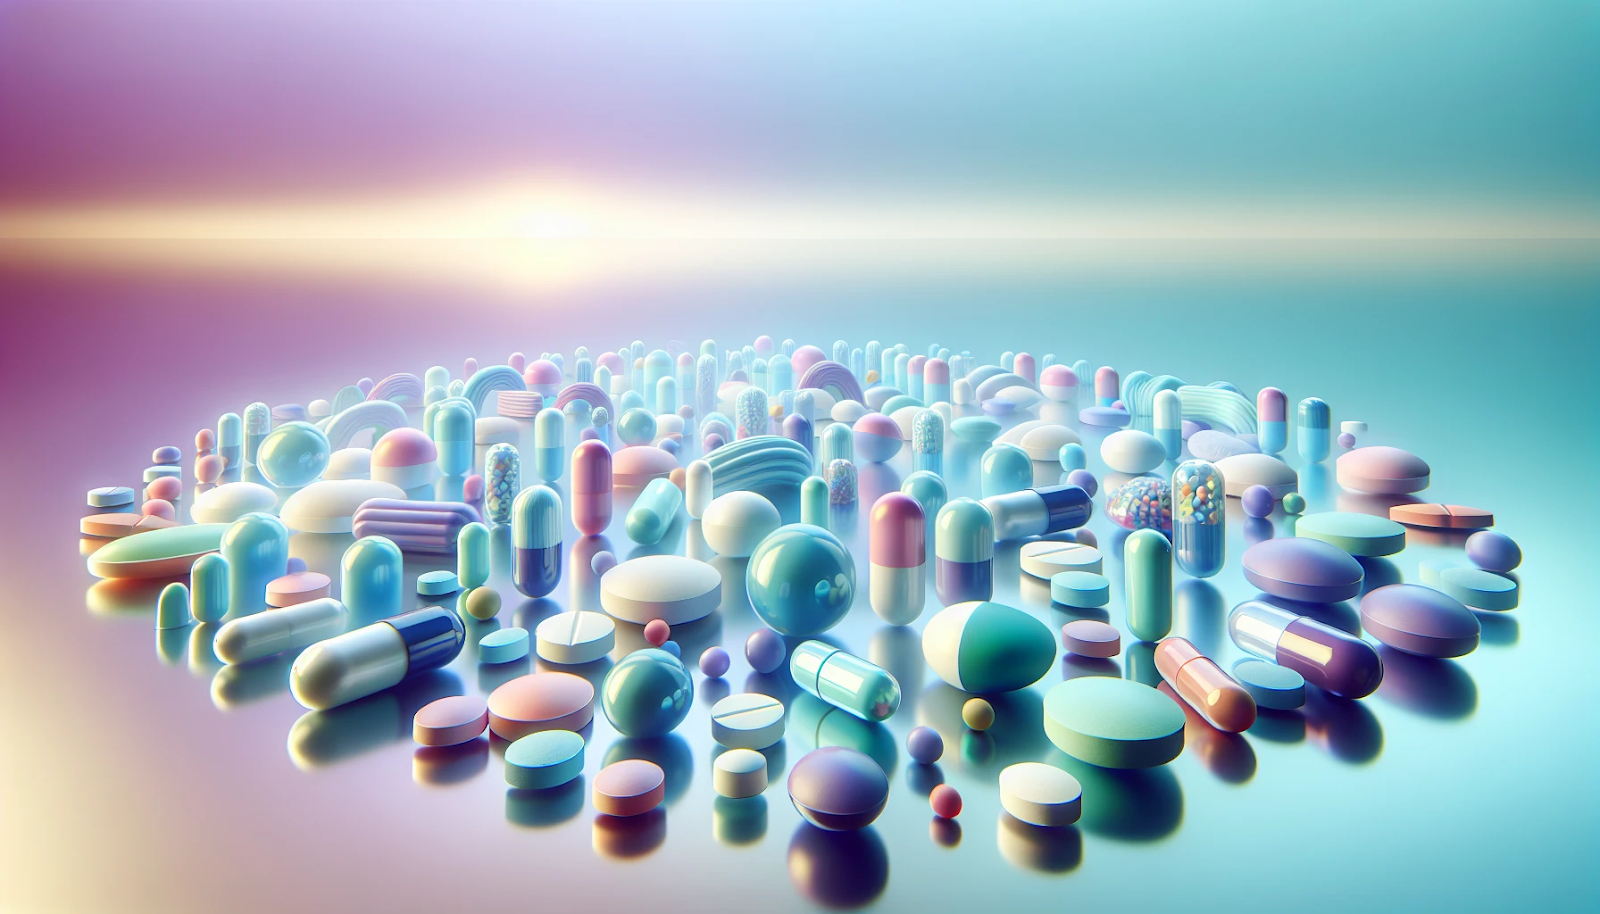 Treatment Options for Rheumatic Diseases - assortment of medication pills